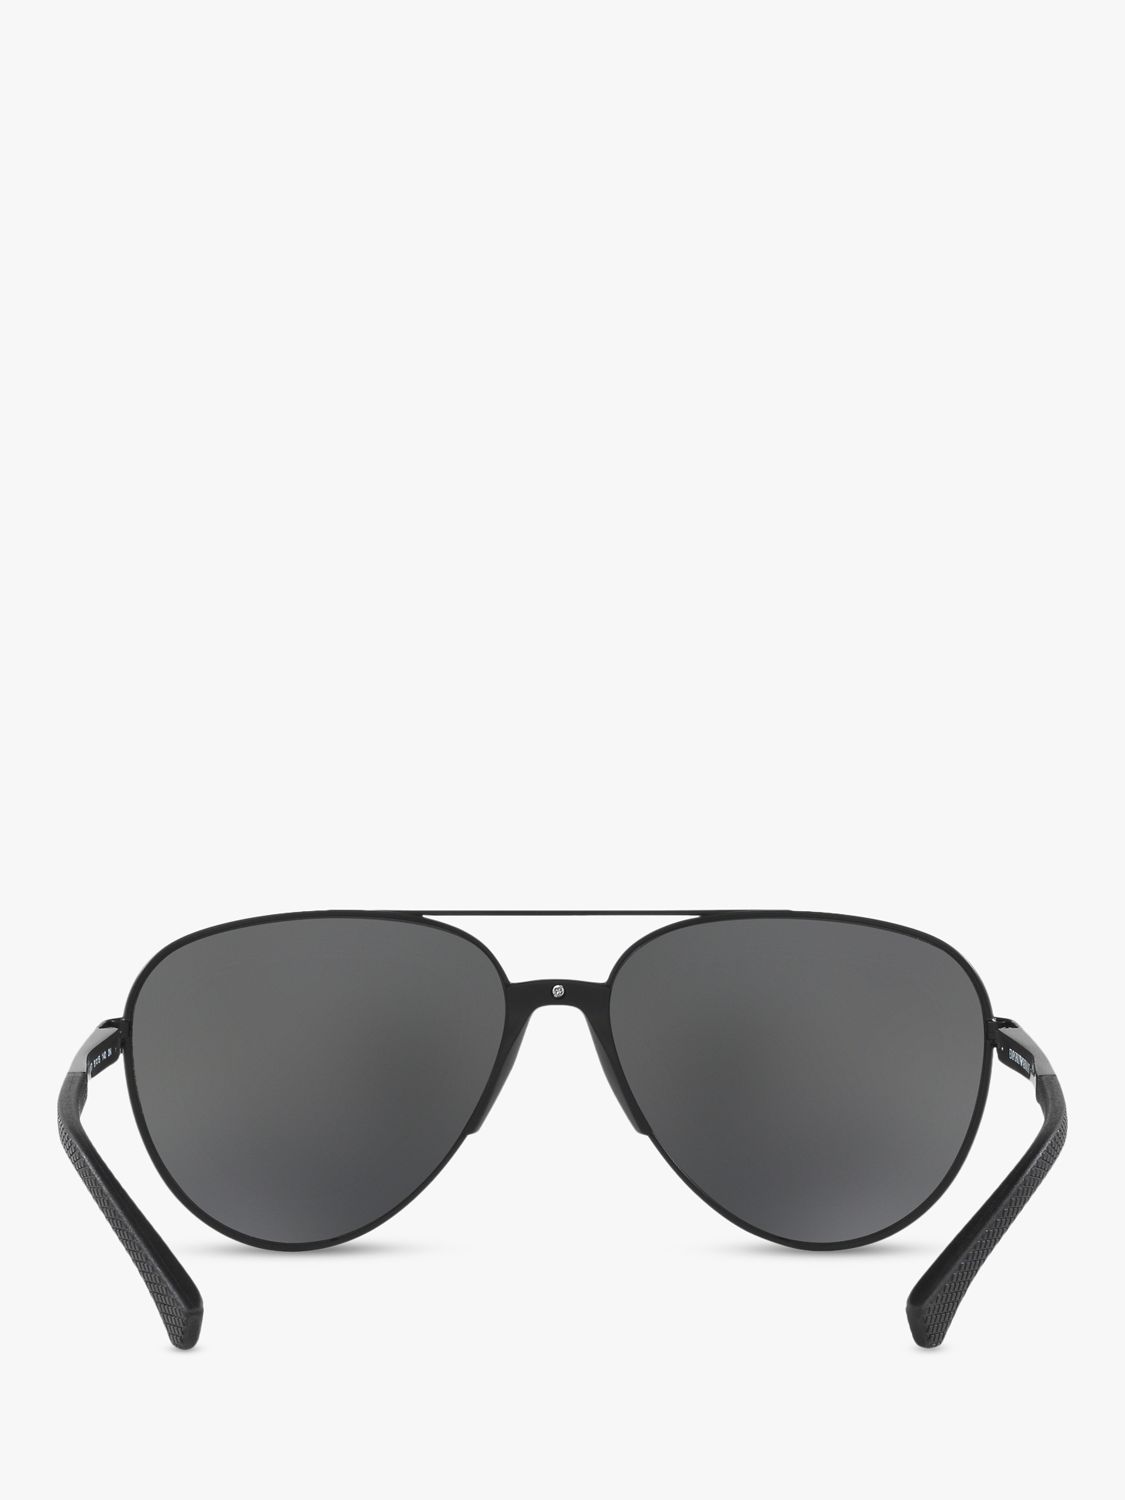 Emporio Armani EA2059 Men's Aviator Sunglasses, Black/Grey at John ...